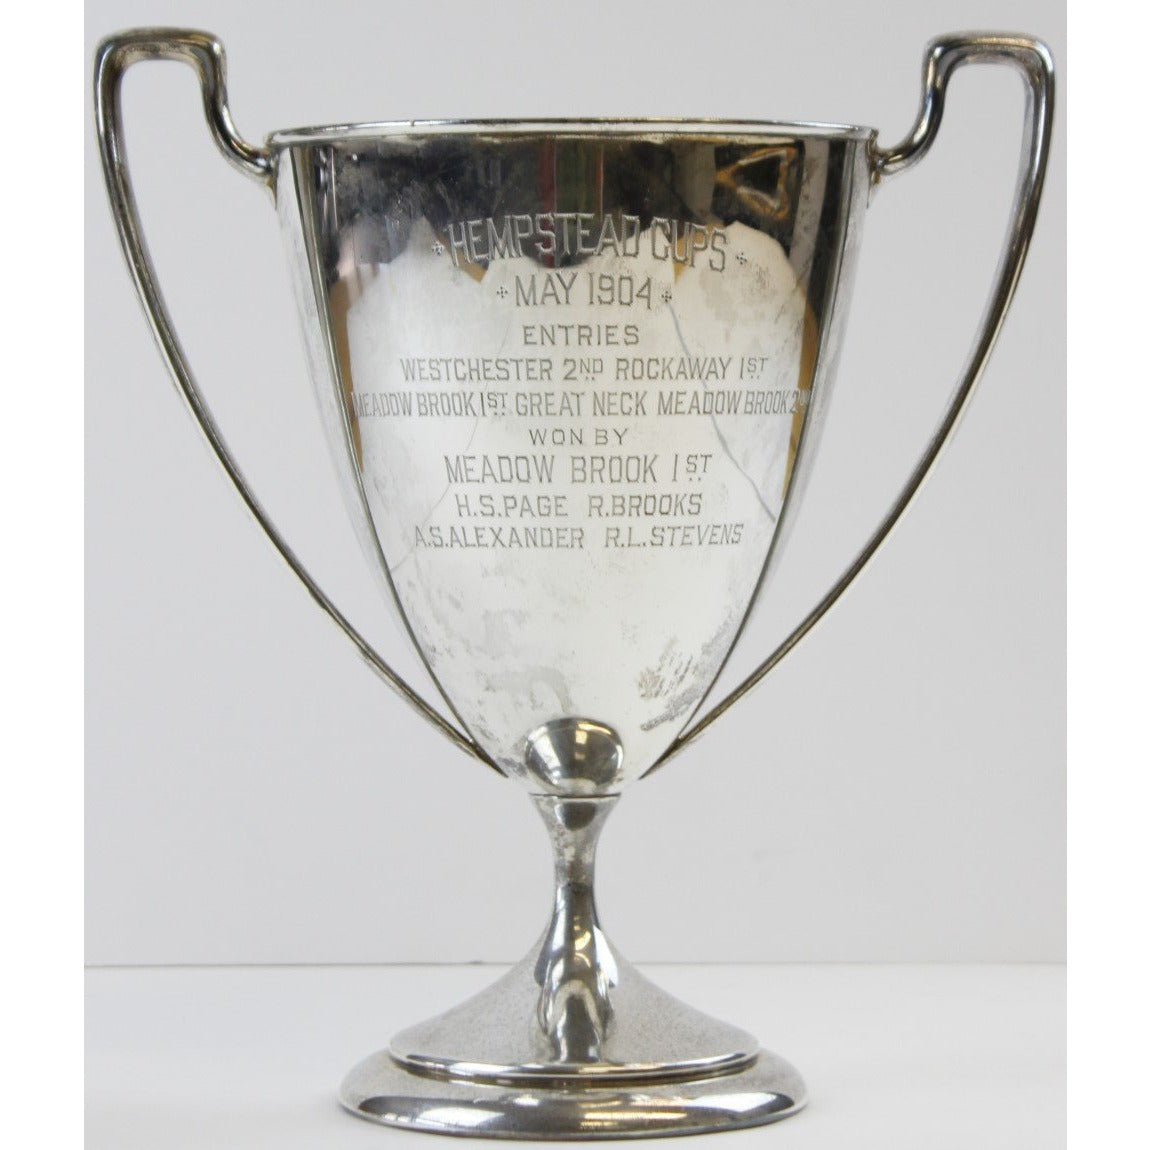 Hemstead Cups May 1904